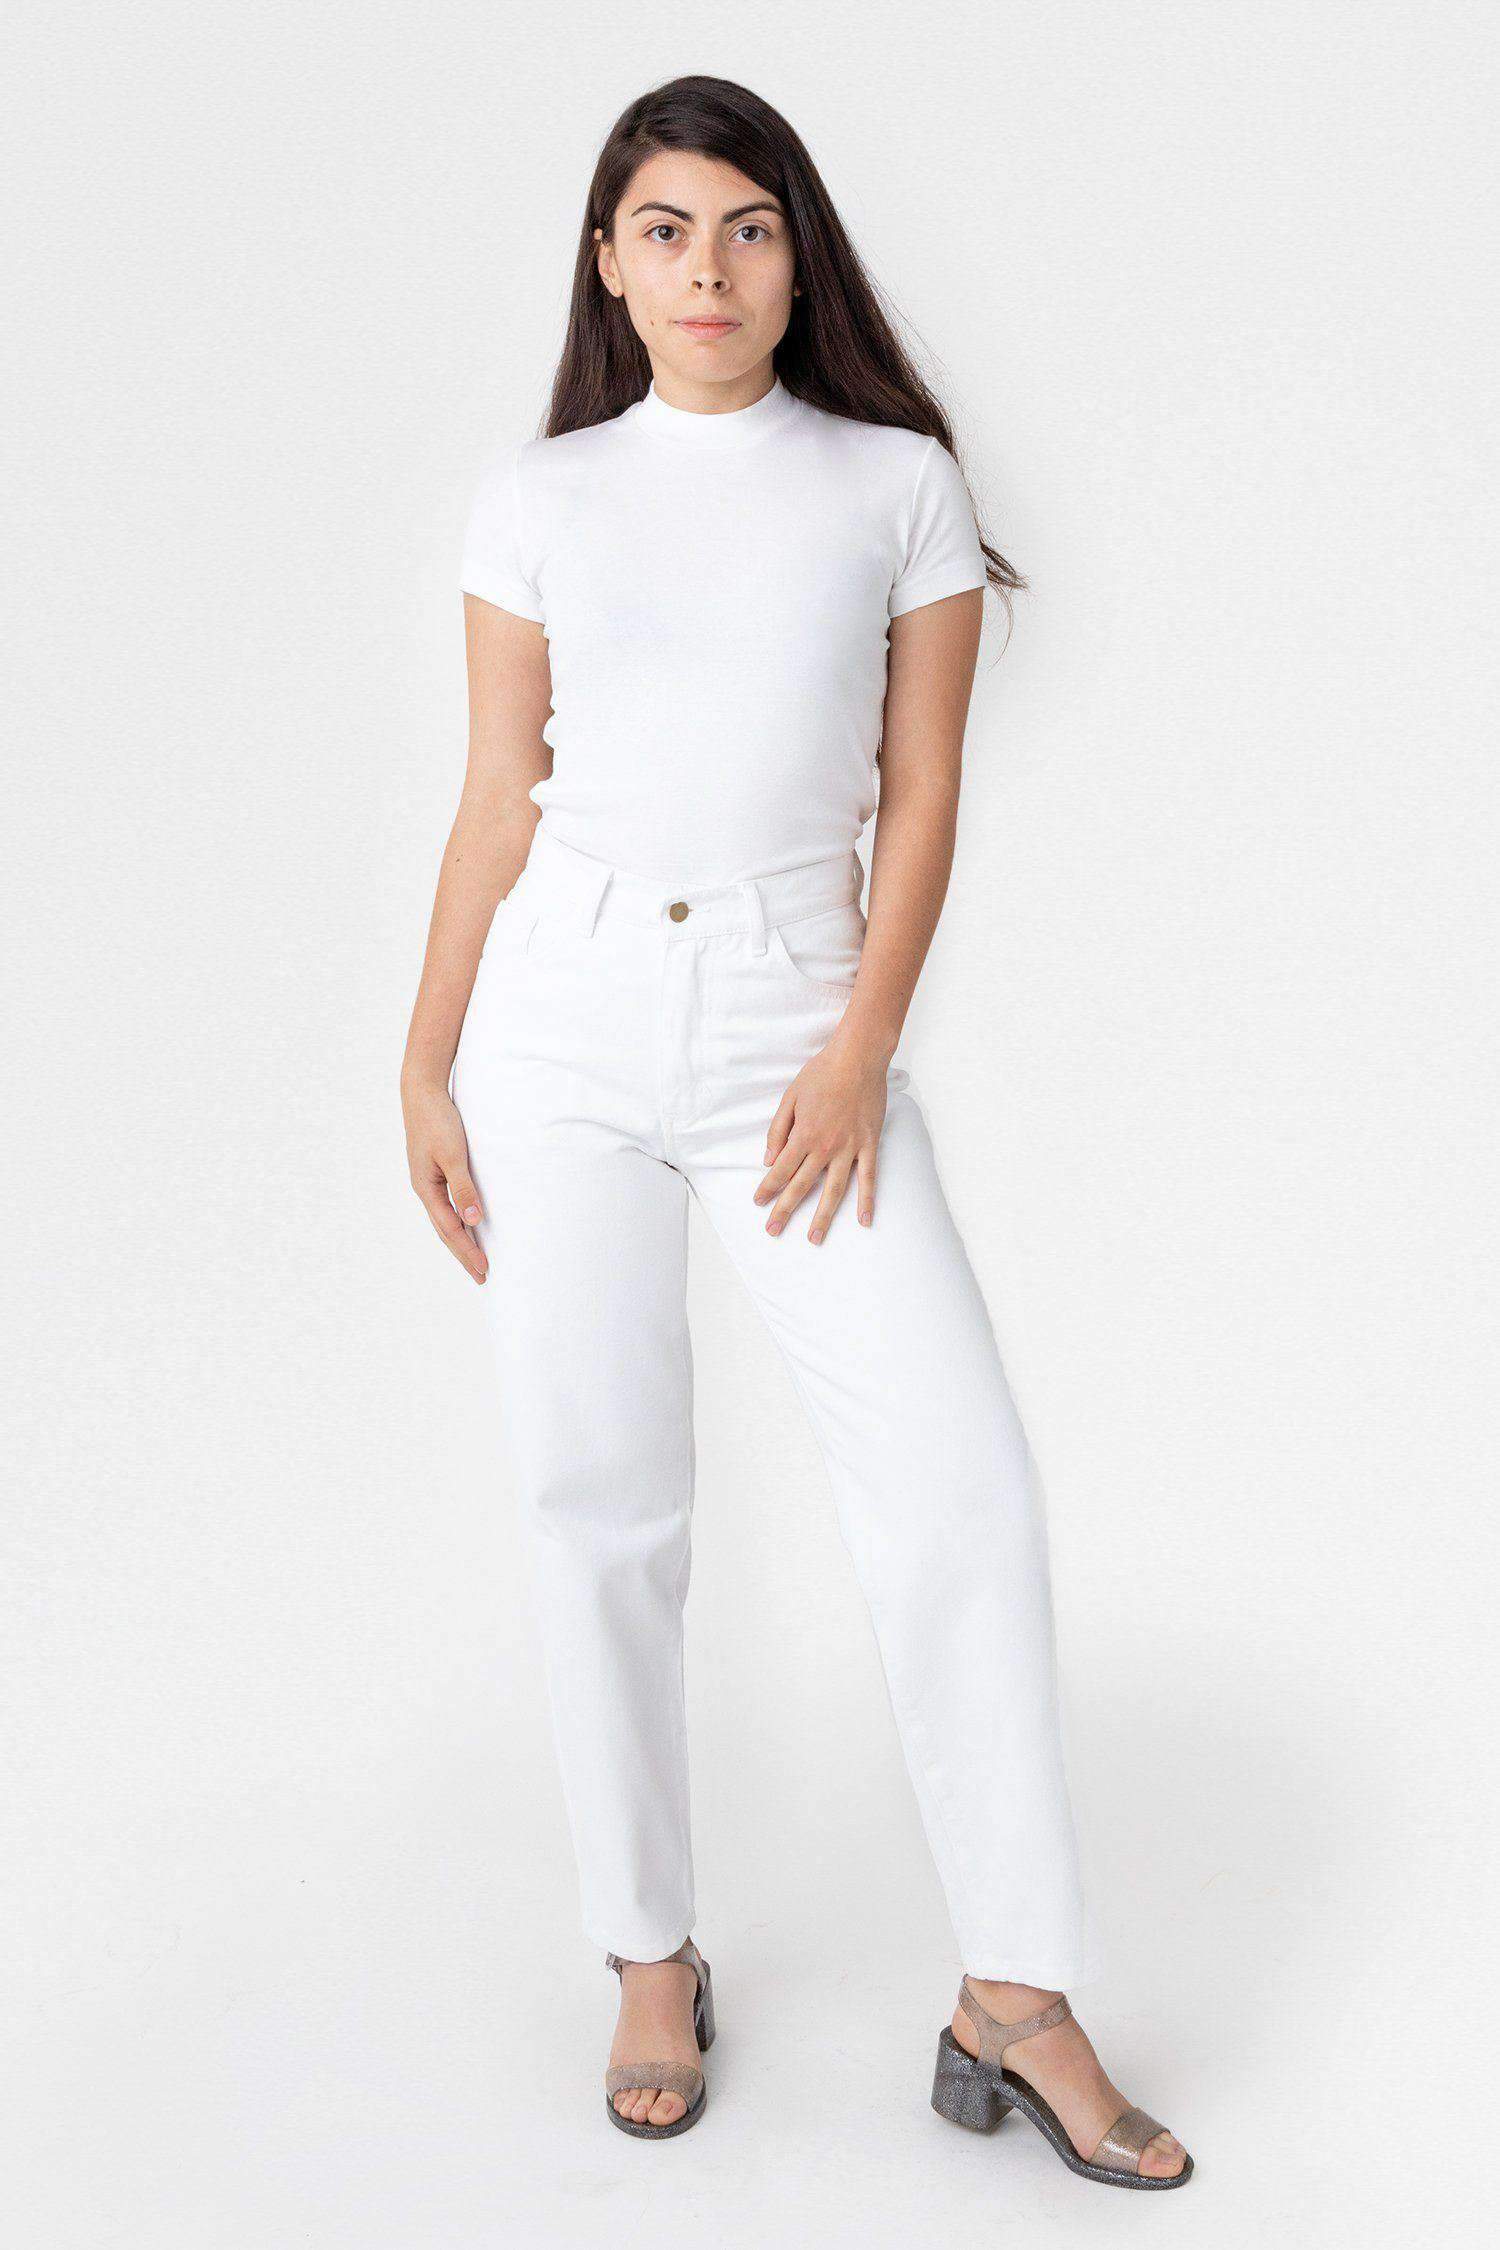 RBDW01GD - Garment Dye Women's Relaxed Fit Bull Denim Jean Jeans Los Angeles Apparel Optic White 25/28 